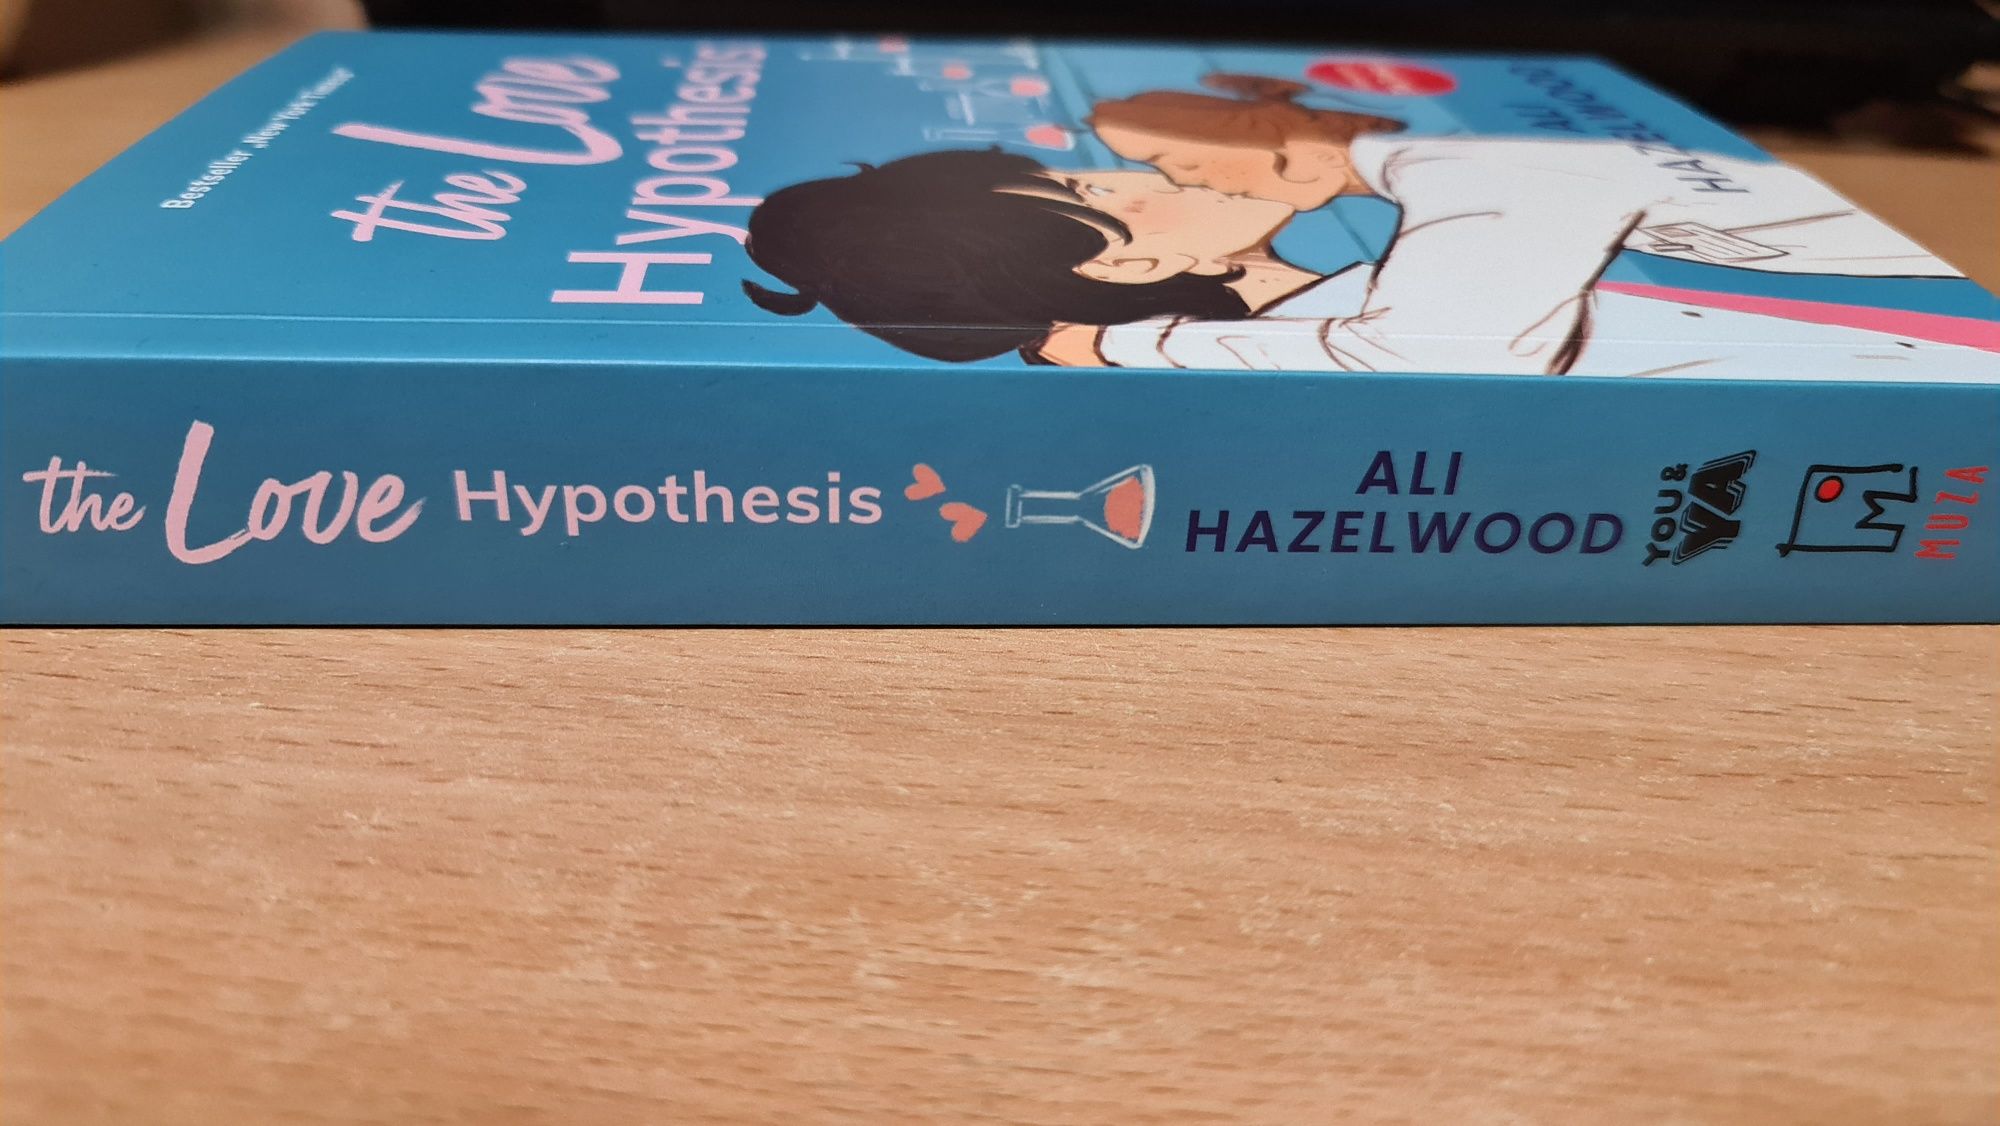 Książka Ali Hazelwood The Love Hypothesis